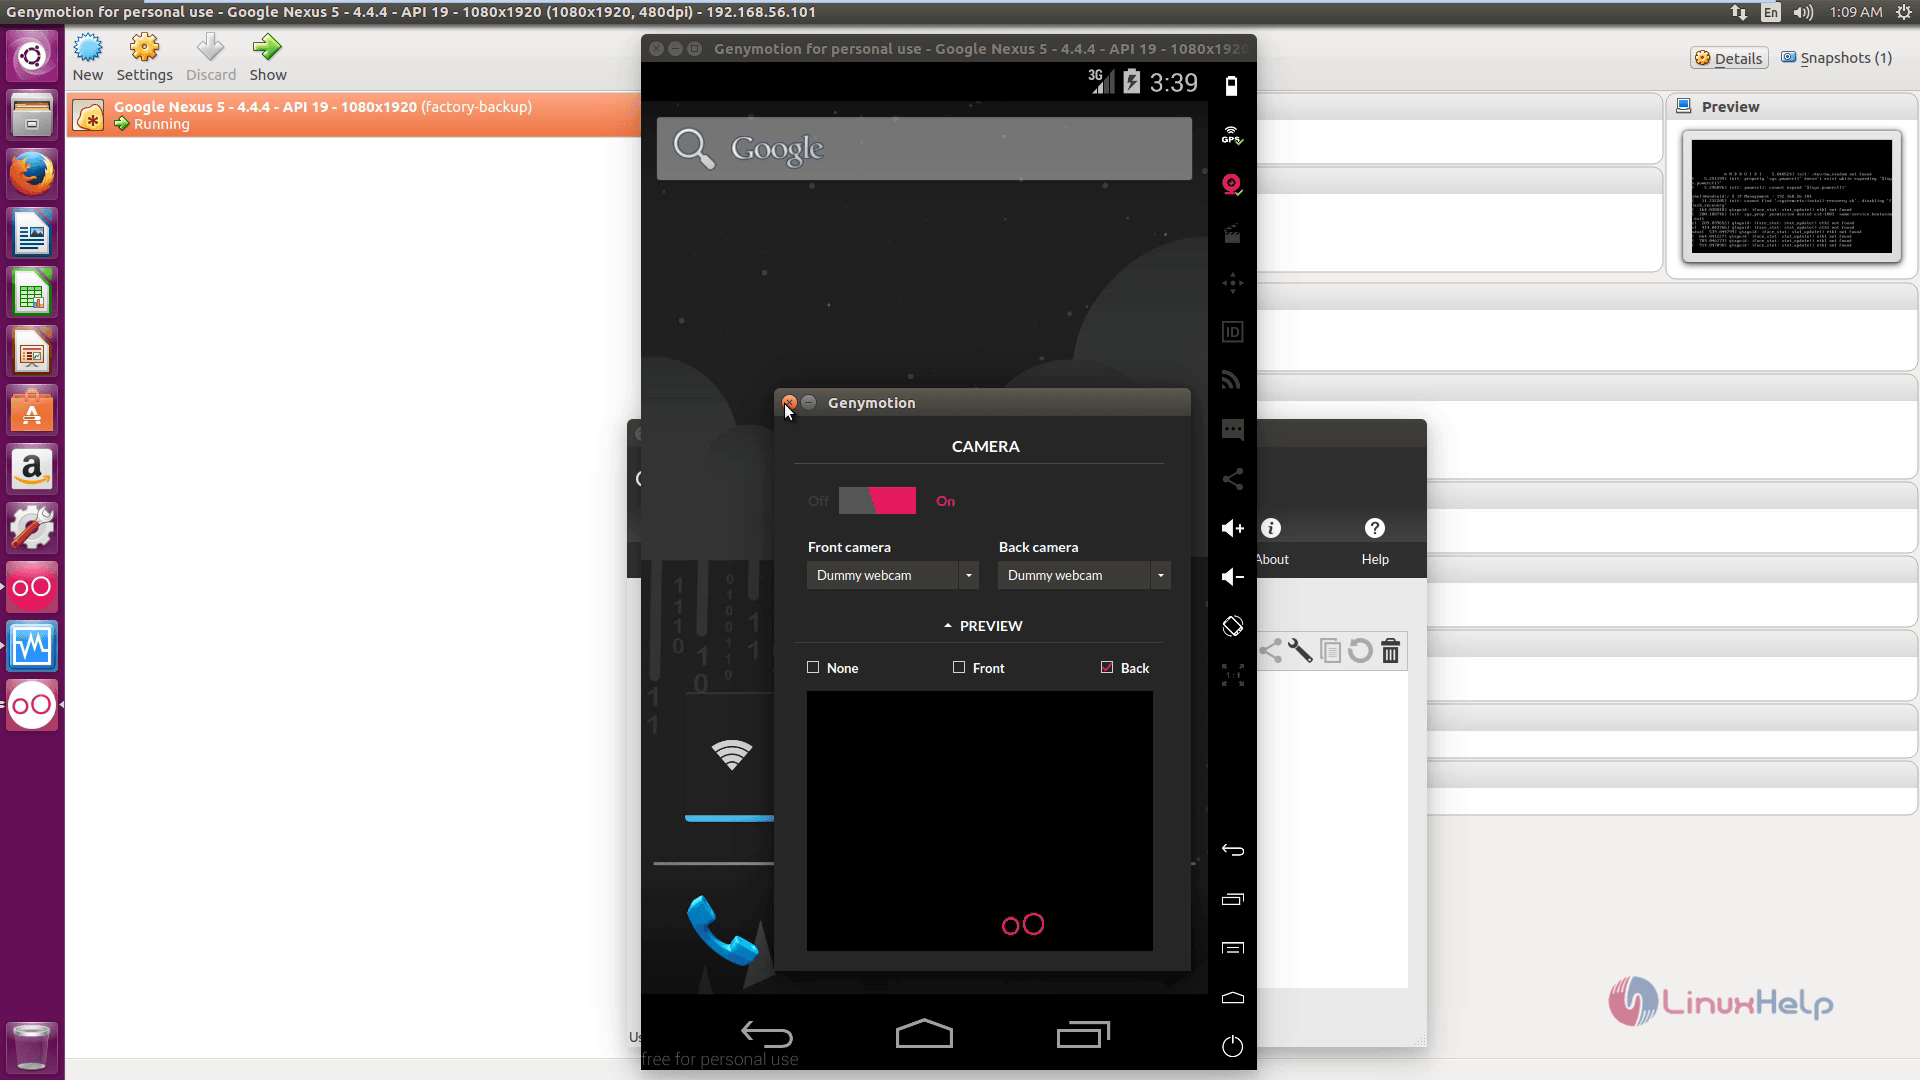 run-Android-Apps-Ubuntu-Genymotion-Emulator-testing-and-presentation-front-back-camera